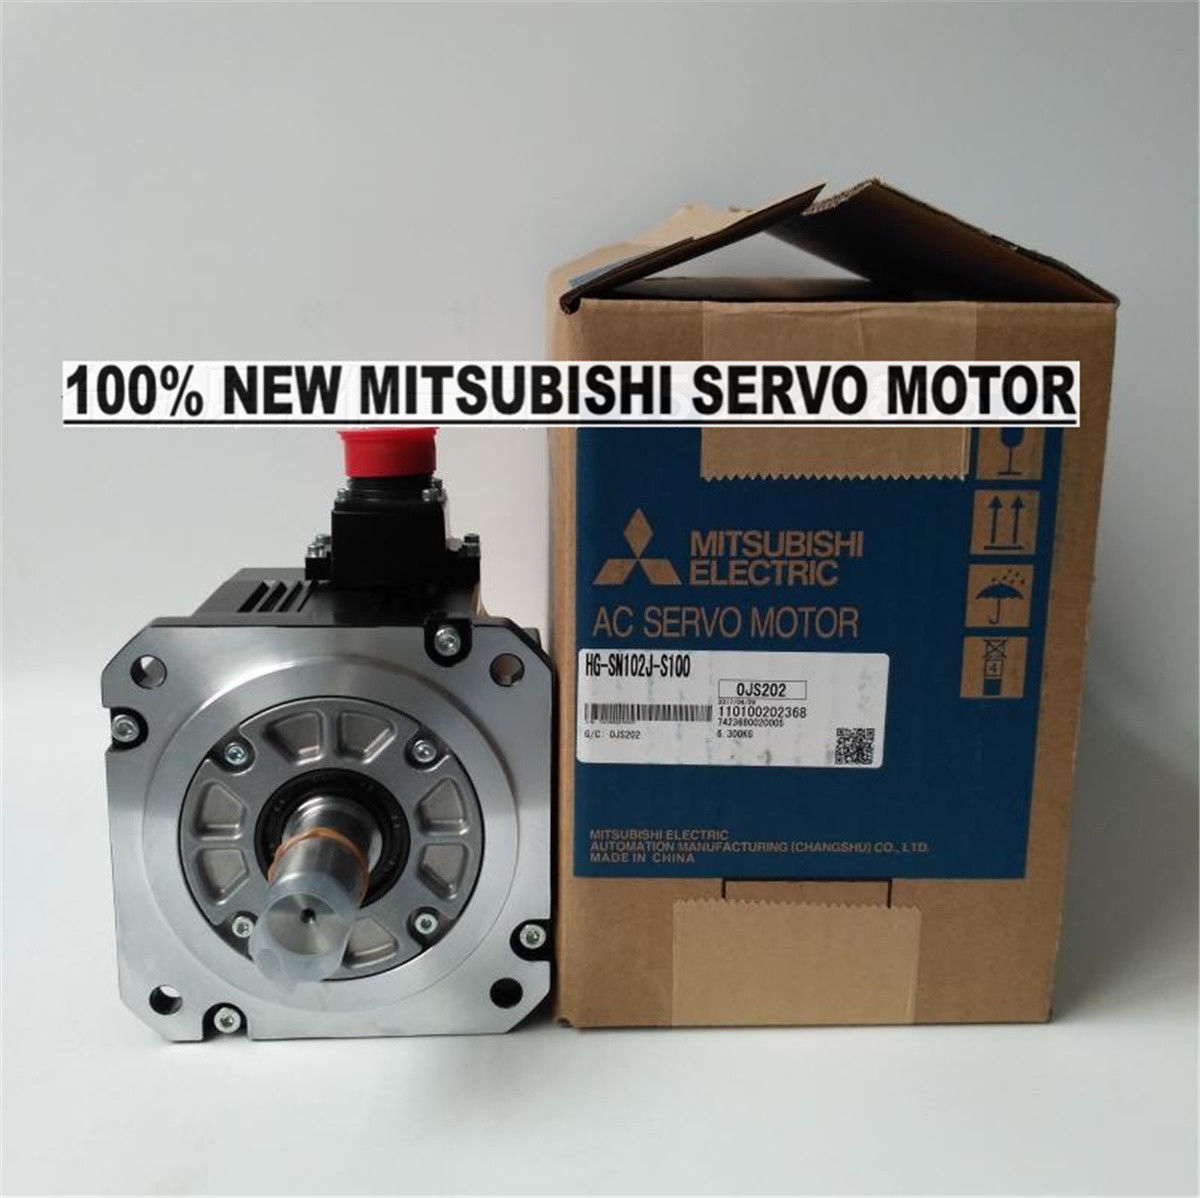 NEW Mitsubishi Servo Motor HG-SN102J-S100 in box HGSN102JS100